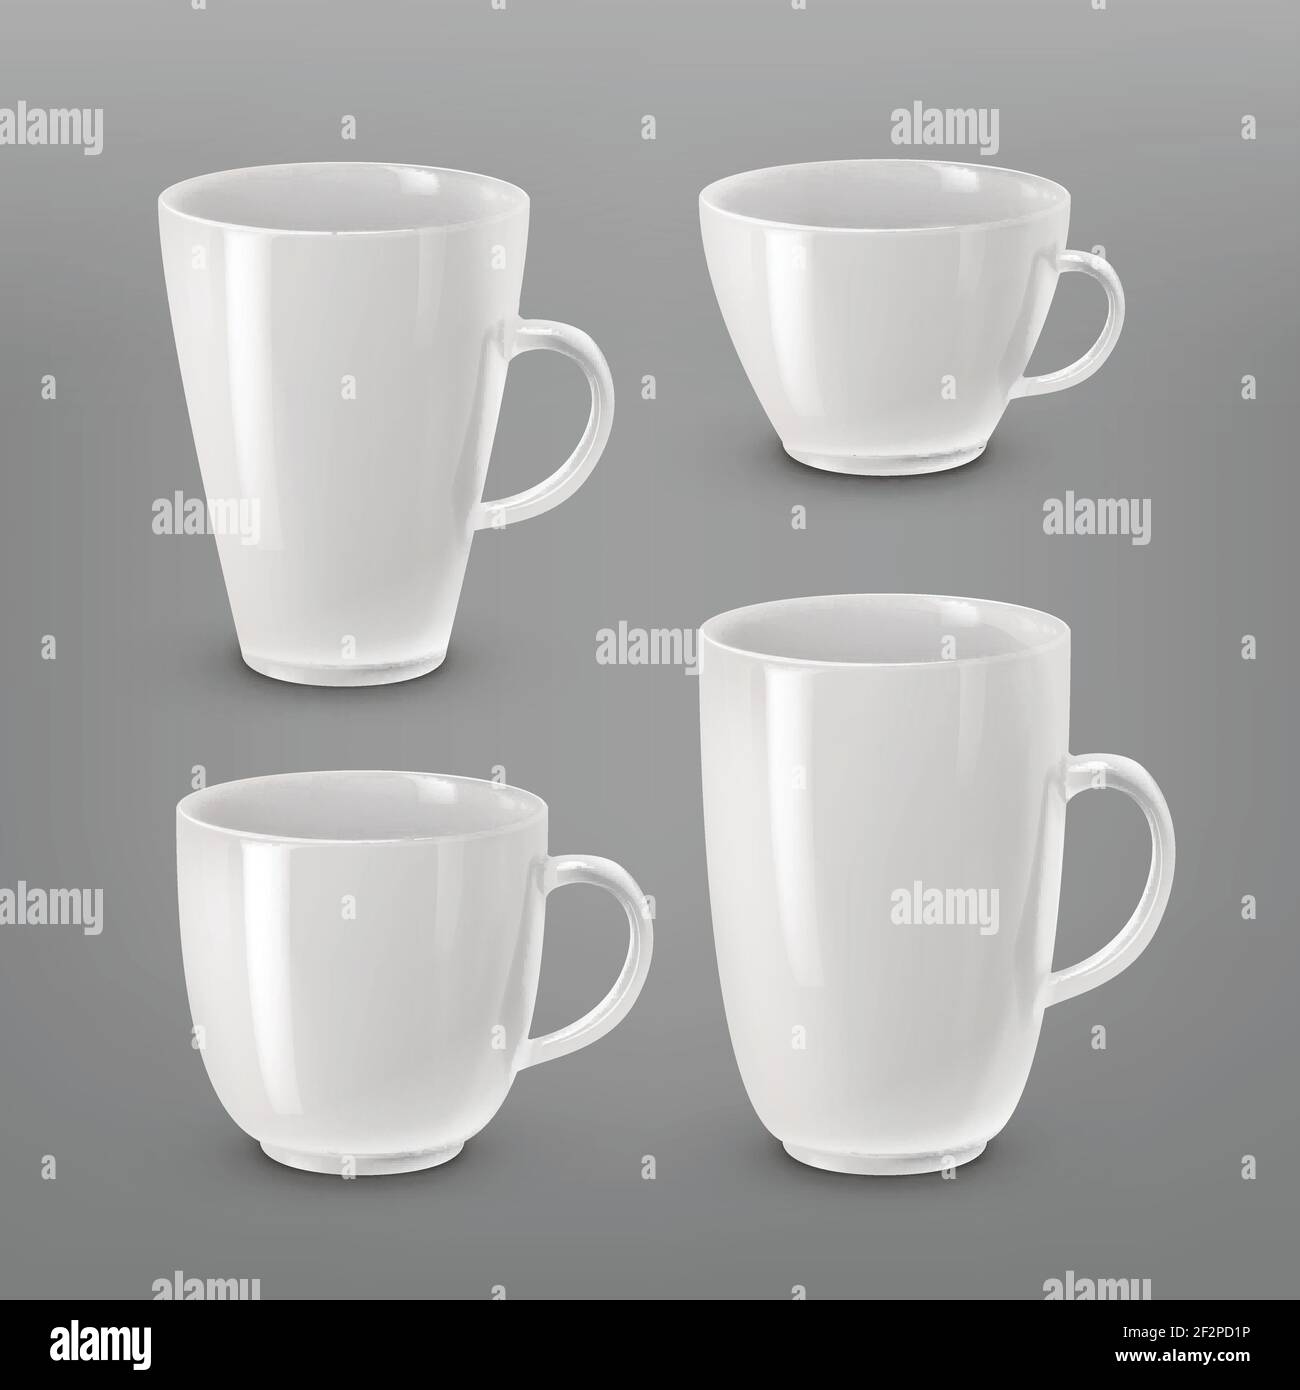 Coffee mugs handle Stock Vector Images - Alamy